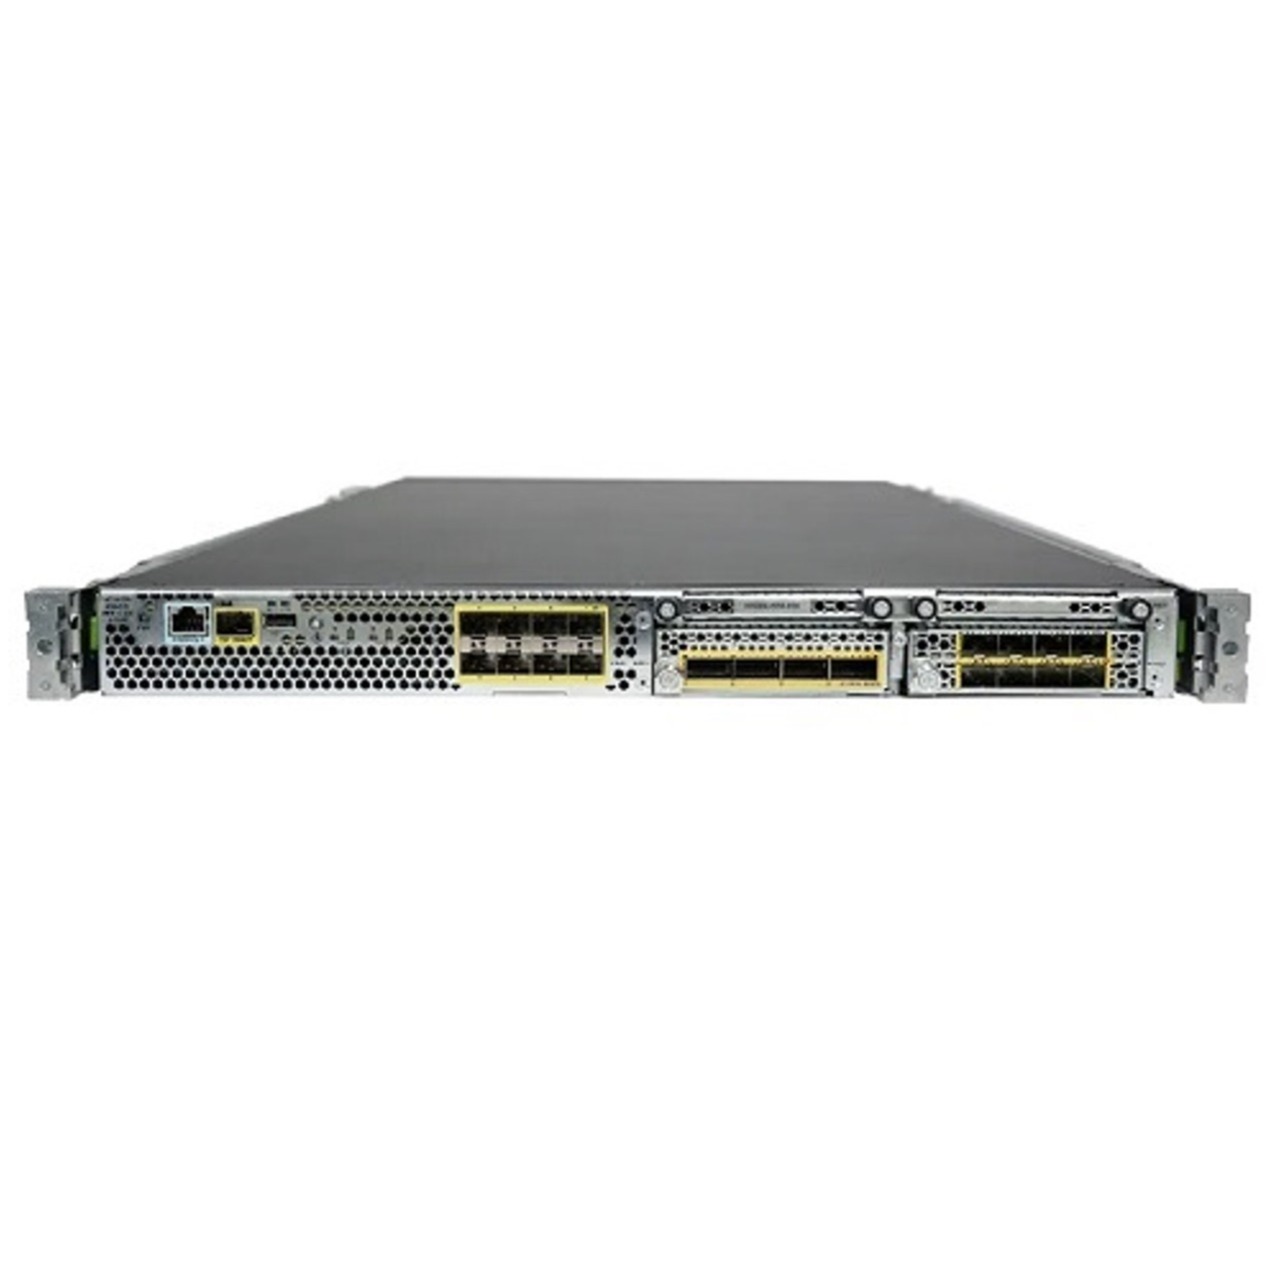 Cisco Firepower 4115 NGFW Appliance, 1RU, 2 x Network Module Bays